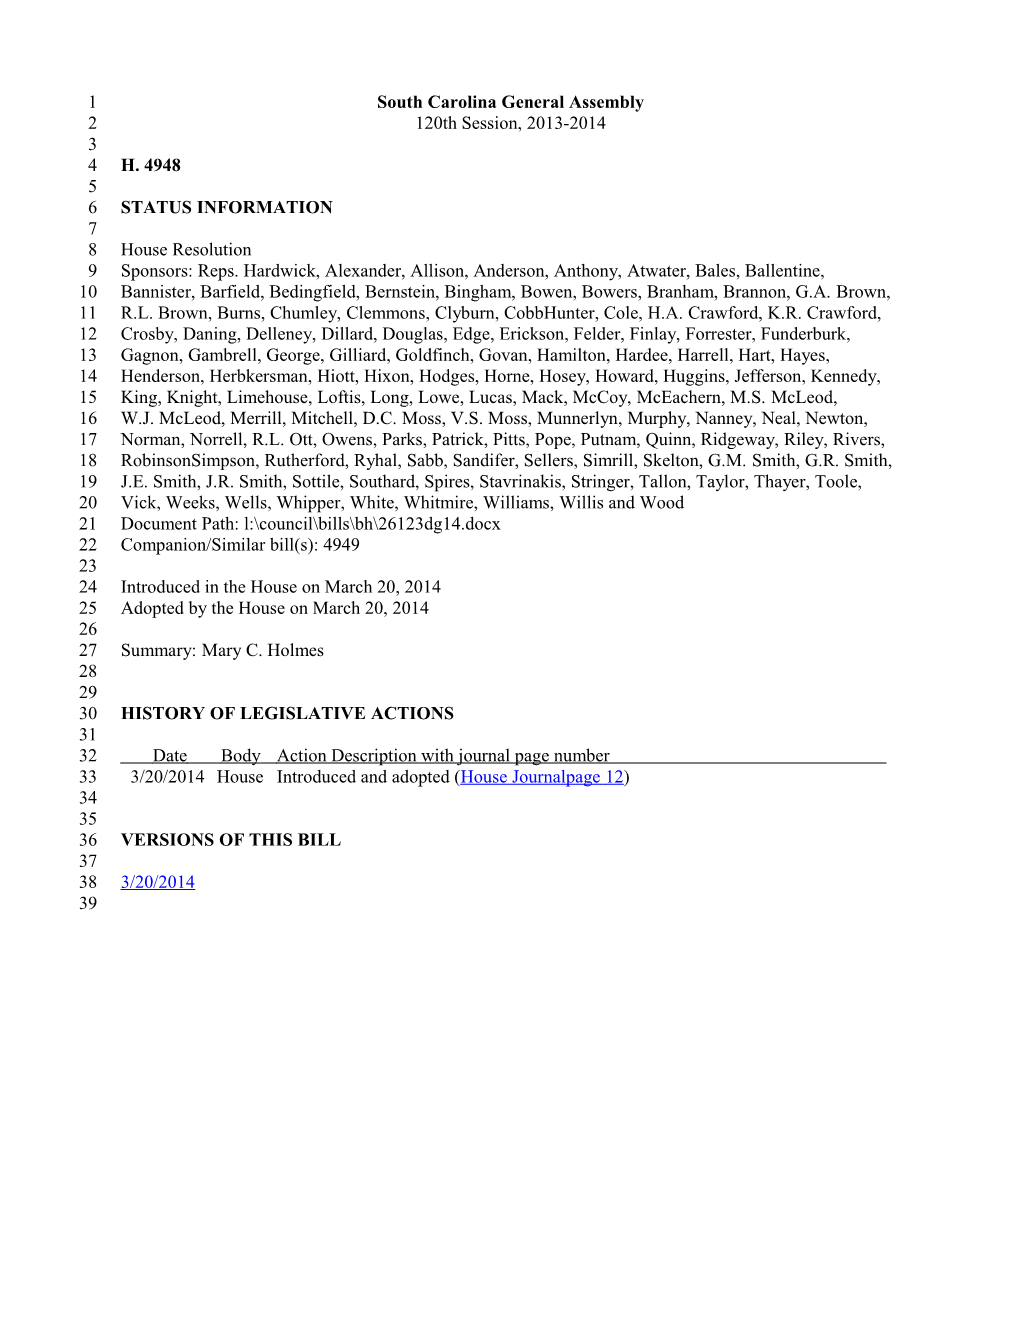 2013-2014 Bill 4948: Mary C. Holmes - South Carolina Legislature Online